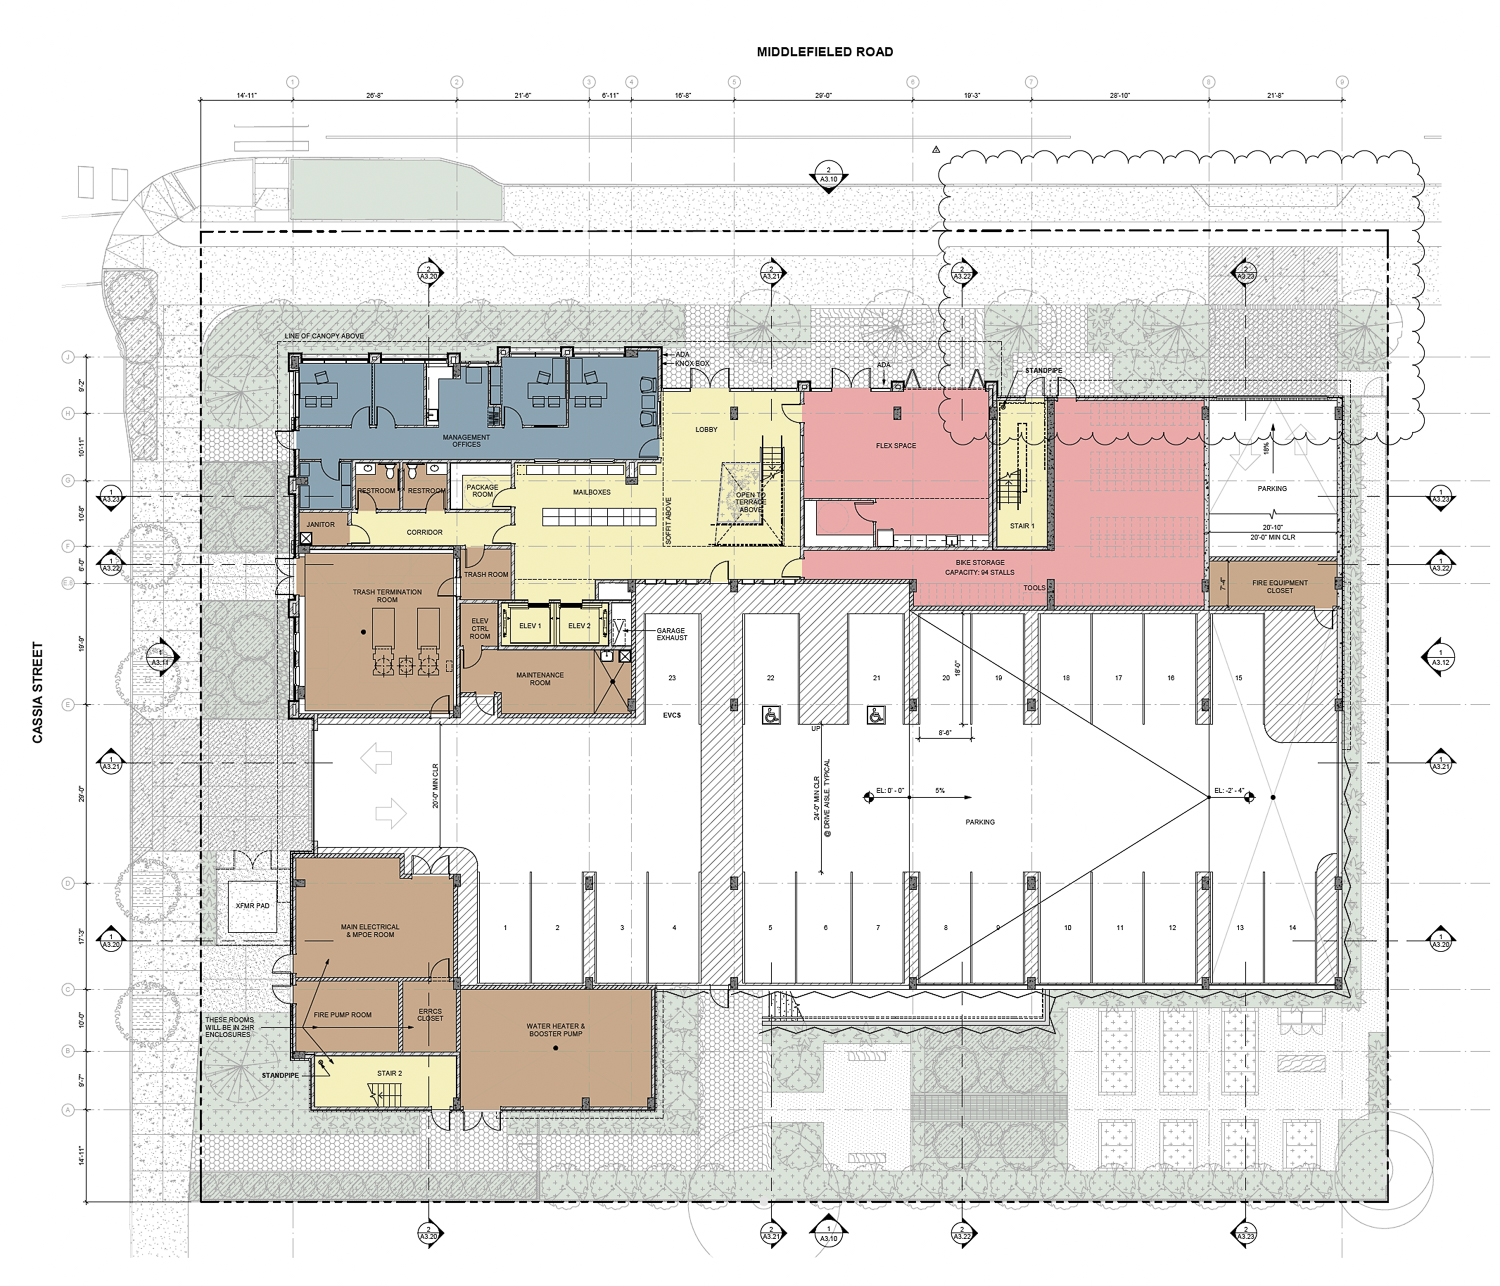 1304 Middlefield Road ground-level floor plan, illustration by Van Meter Williams Pollack